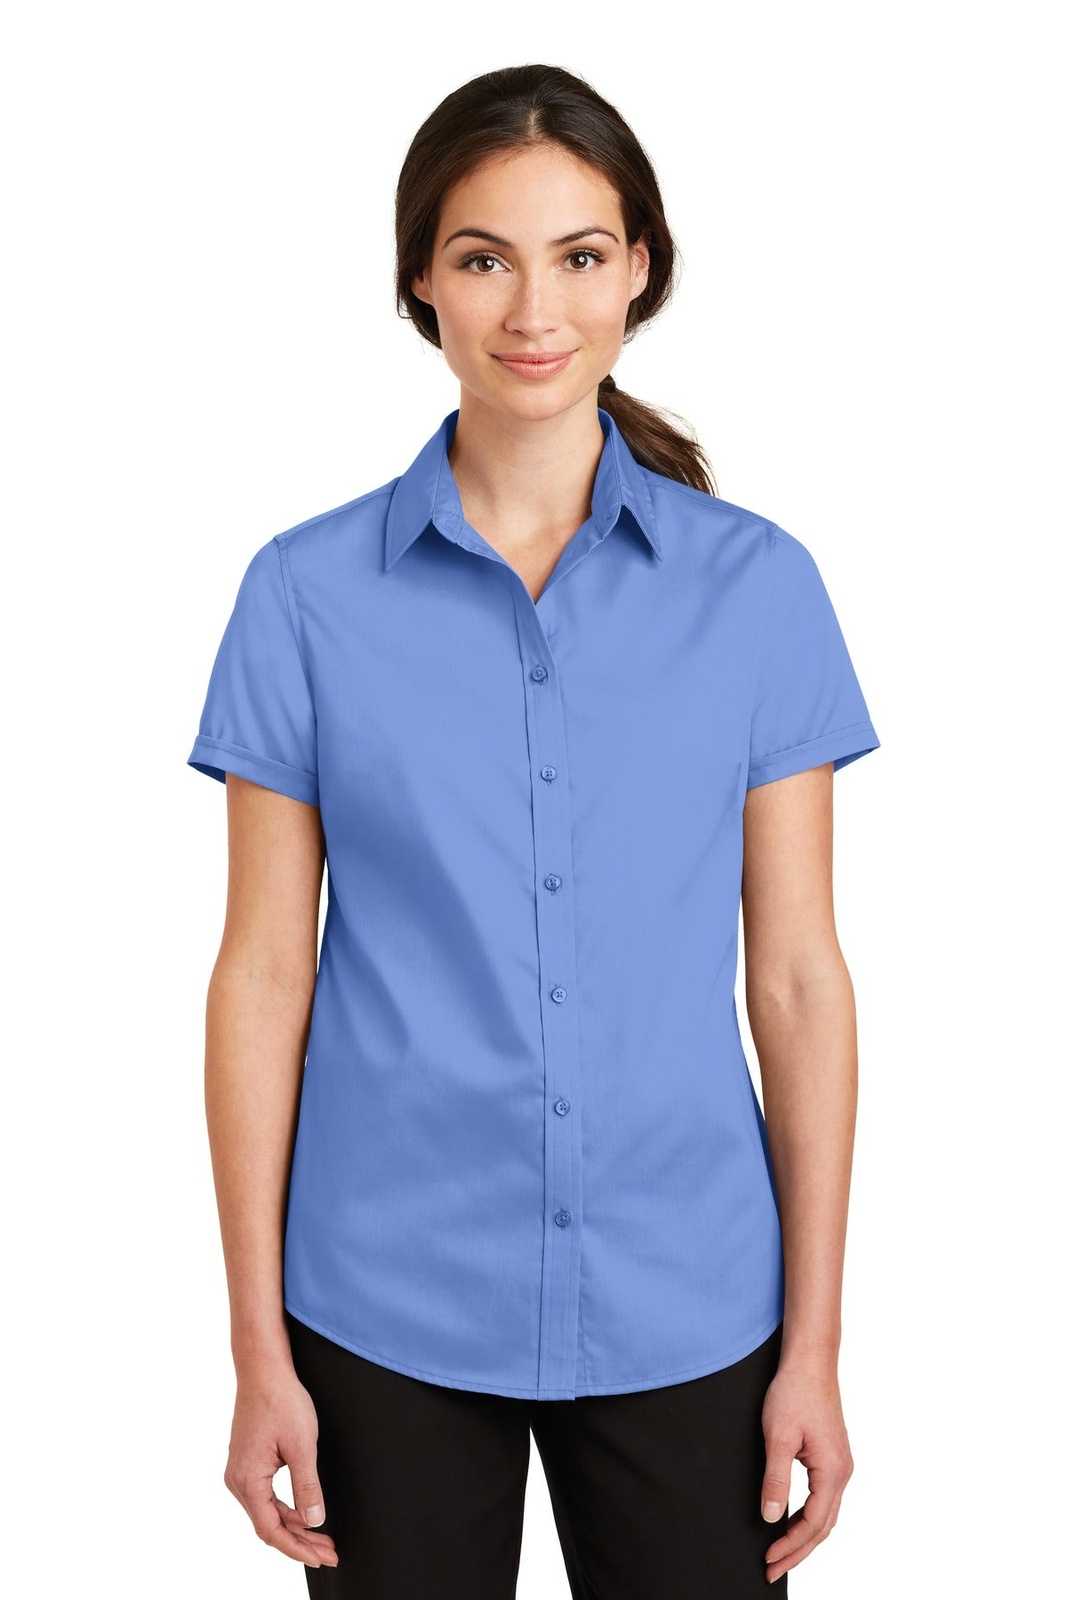 Port Authority L664 Ladies Short Sleeve Superpro Twill Shirt - Ultramarine Blue - HIT a Double - 1